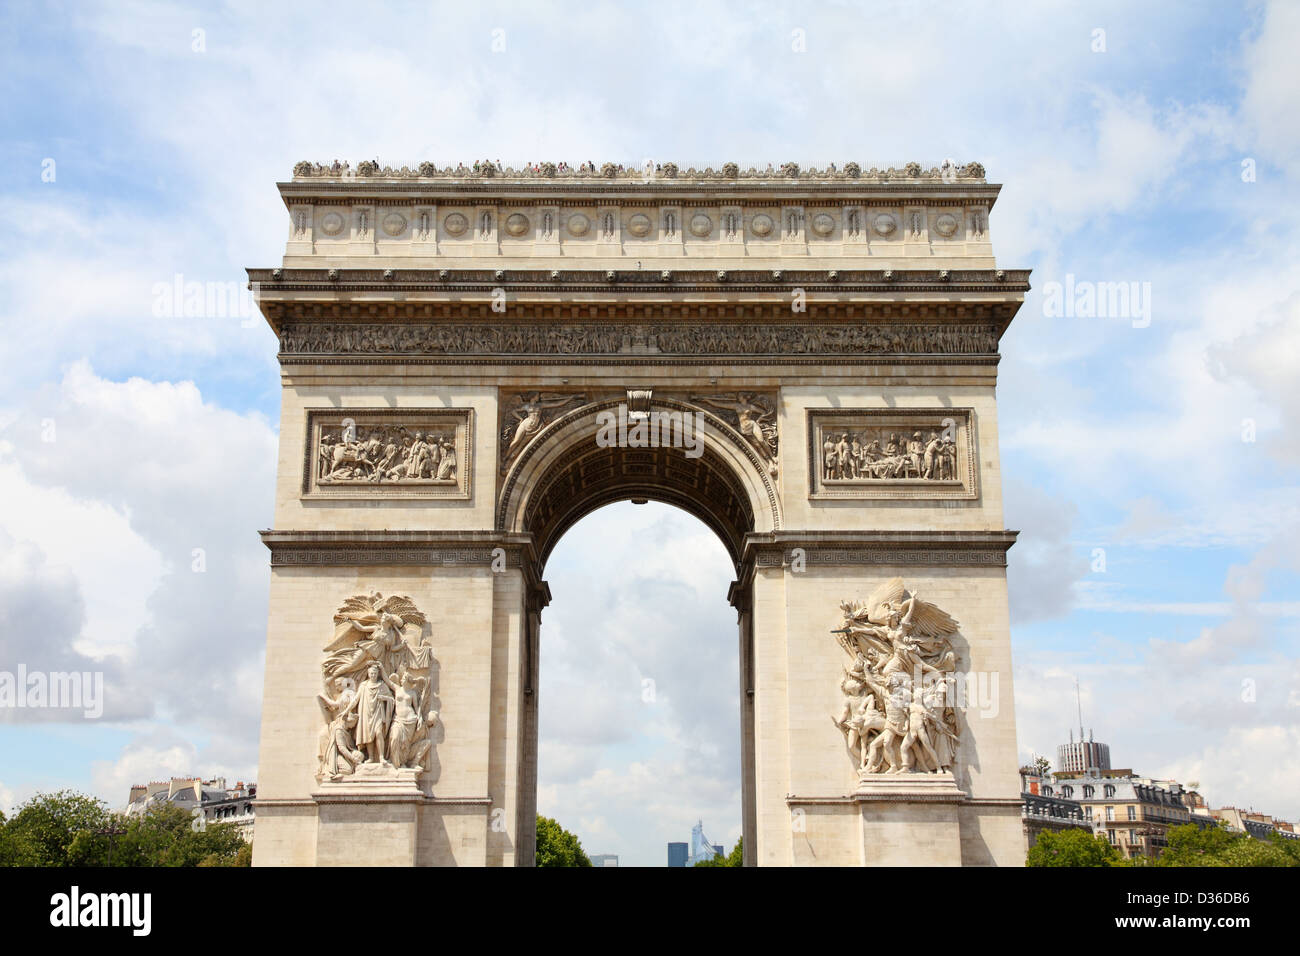 Paris, Frankreich - berühmten Triumphbogen (Arc de Triomphe) am Ende der Champs-Elysees Street gelegen. UNESCO-Weltkulturerbe. Stockfoto